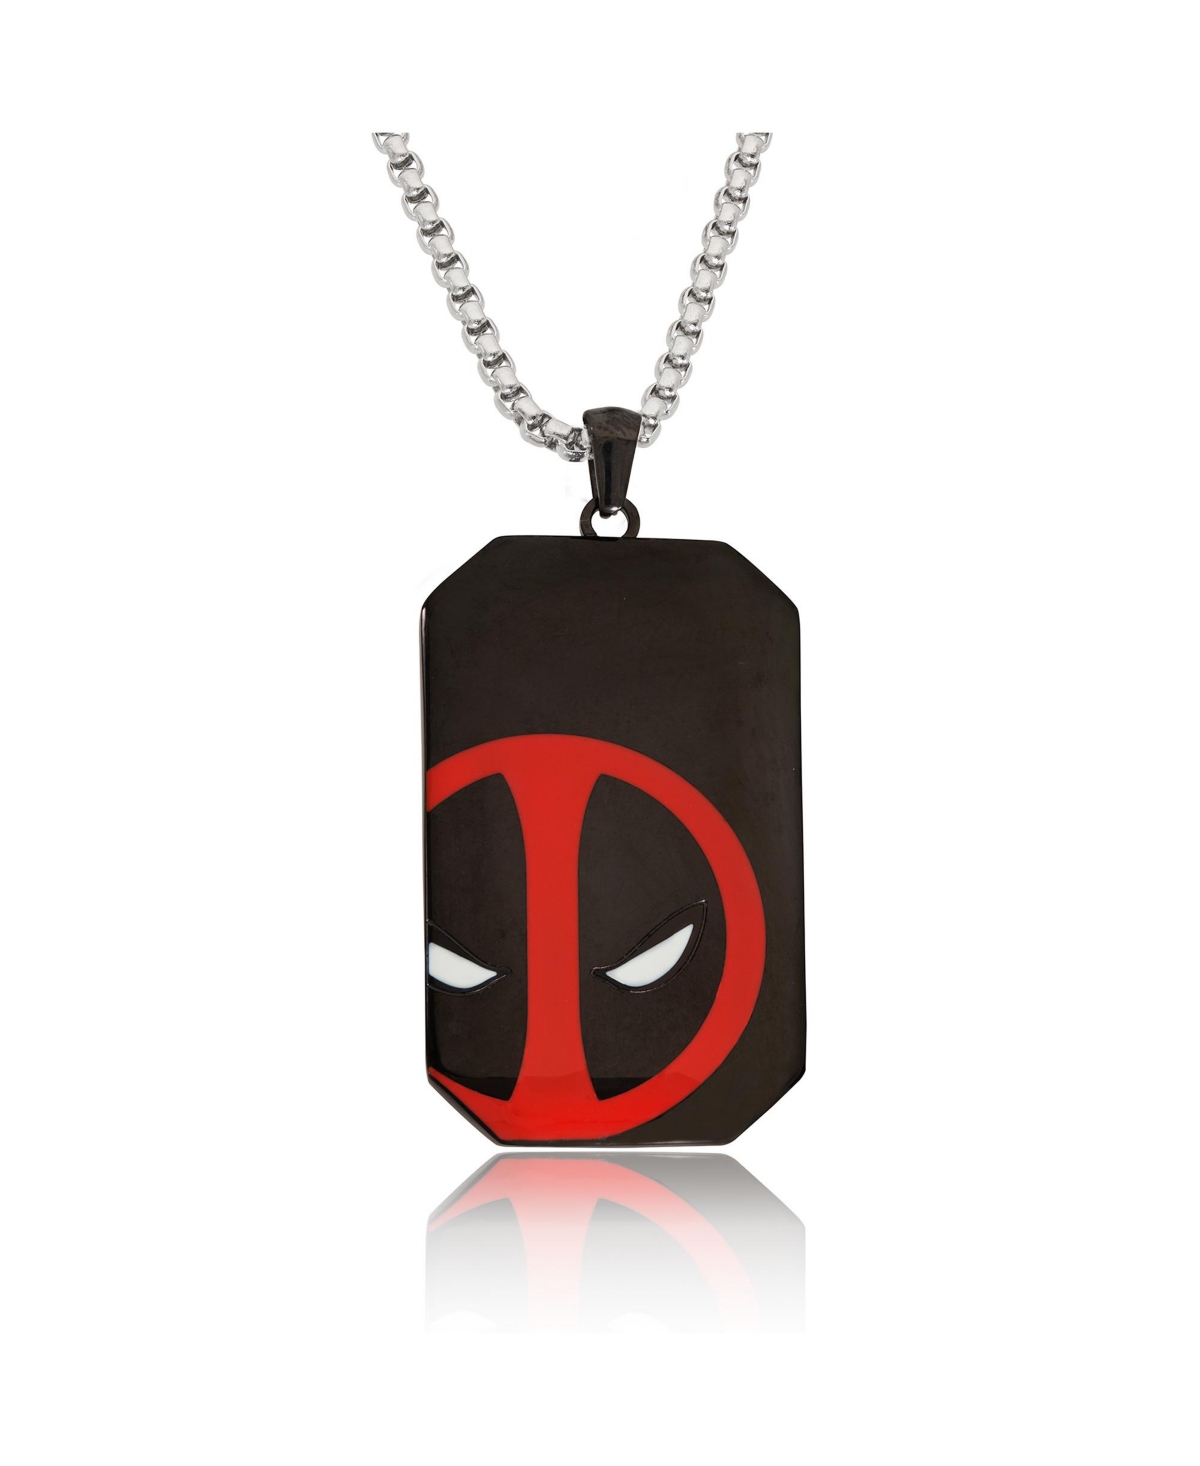 Deadpool Stainless Steel (316L) Pendant, 22'' Box Chain - Silver tone, black